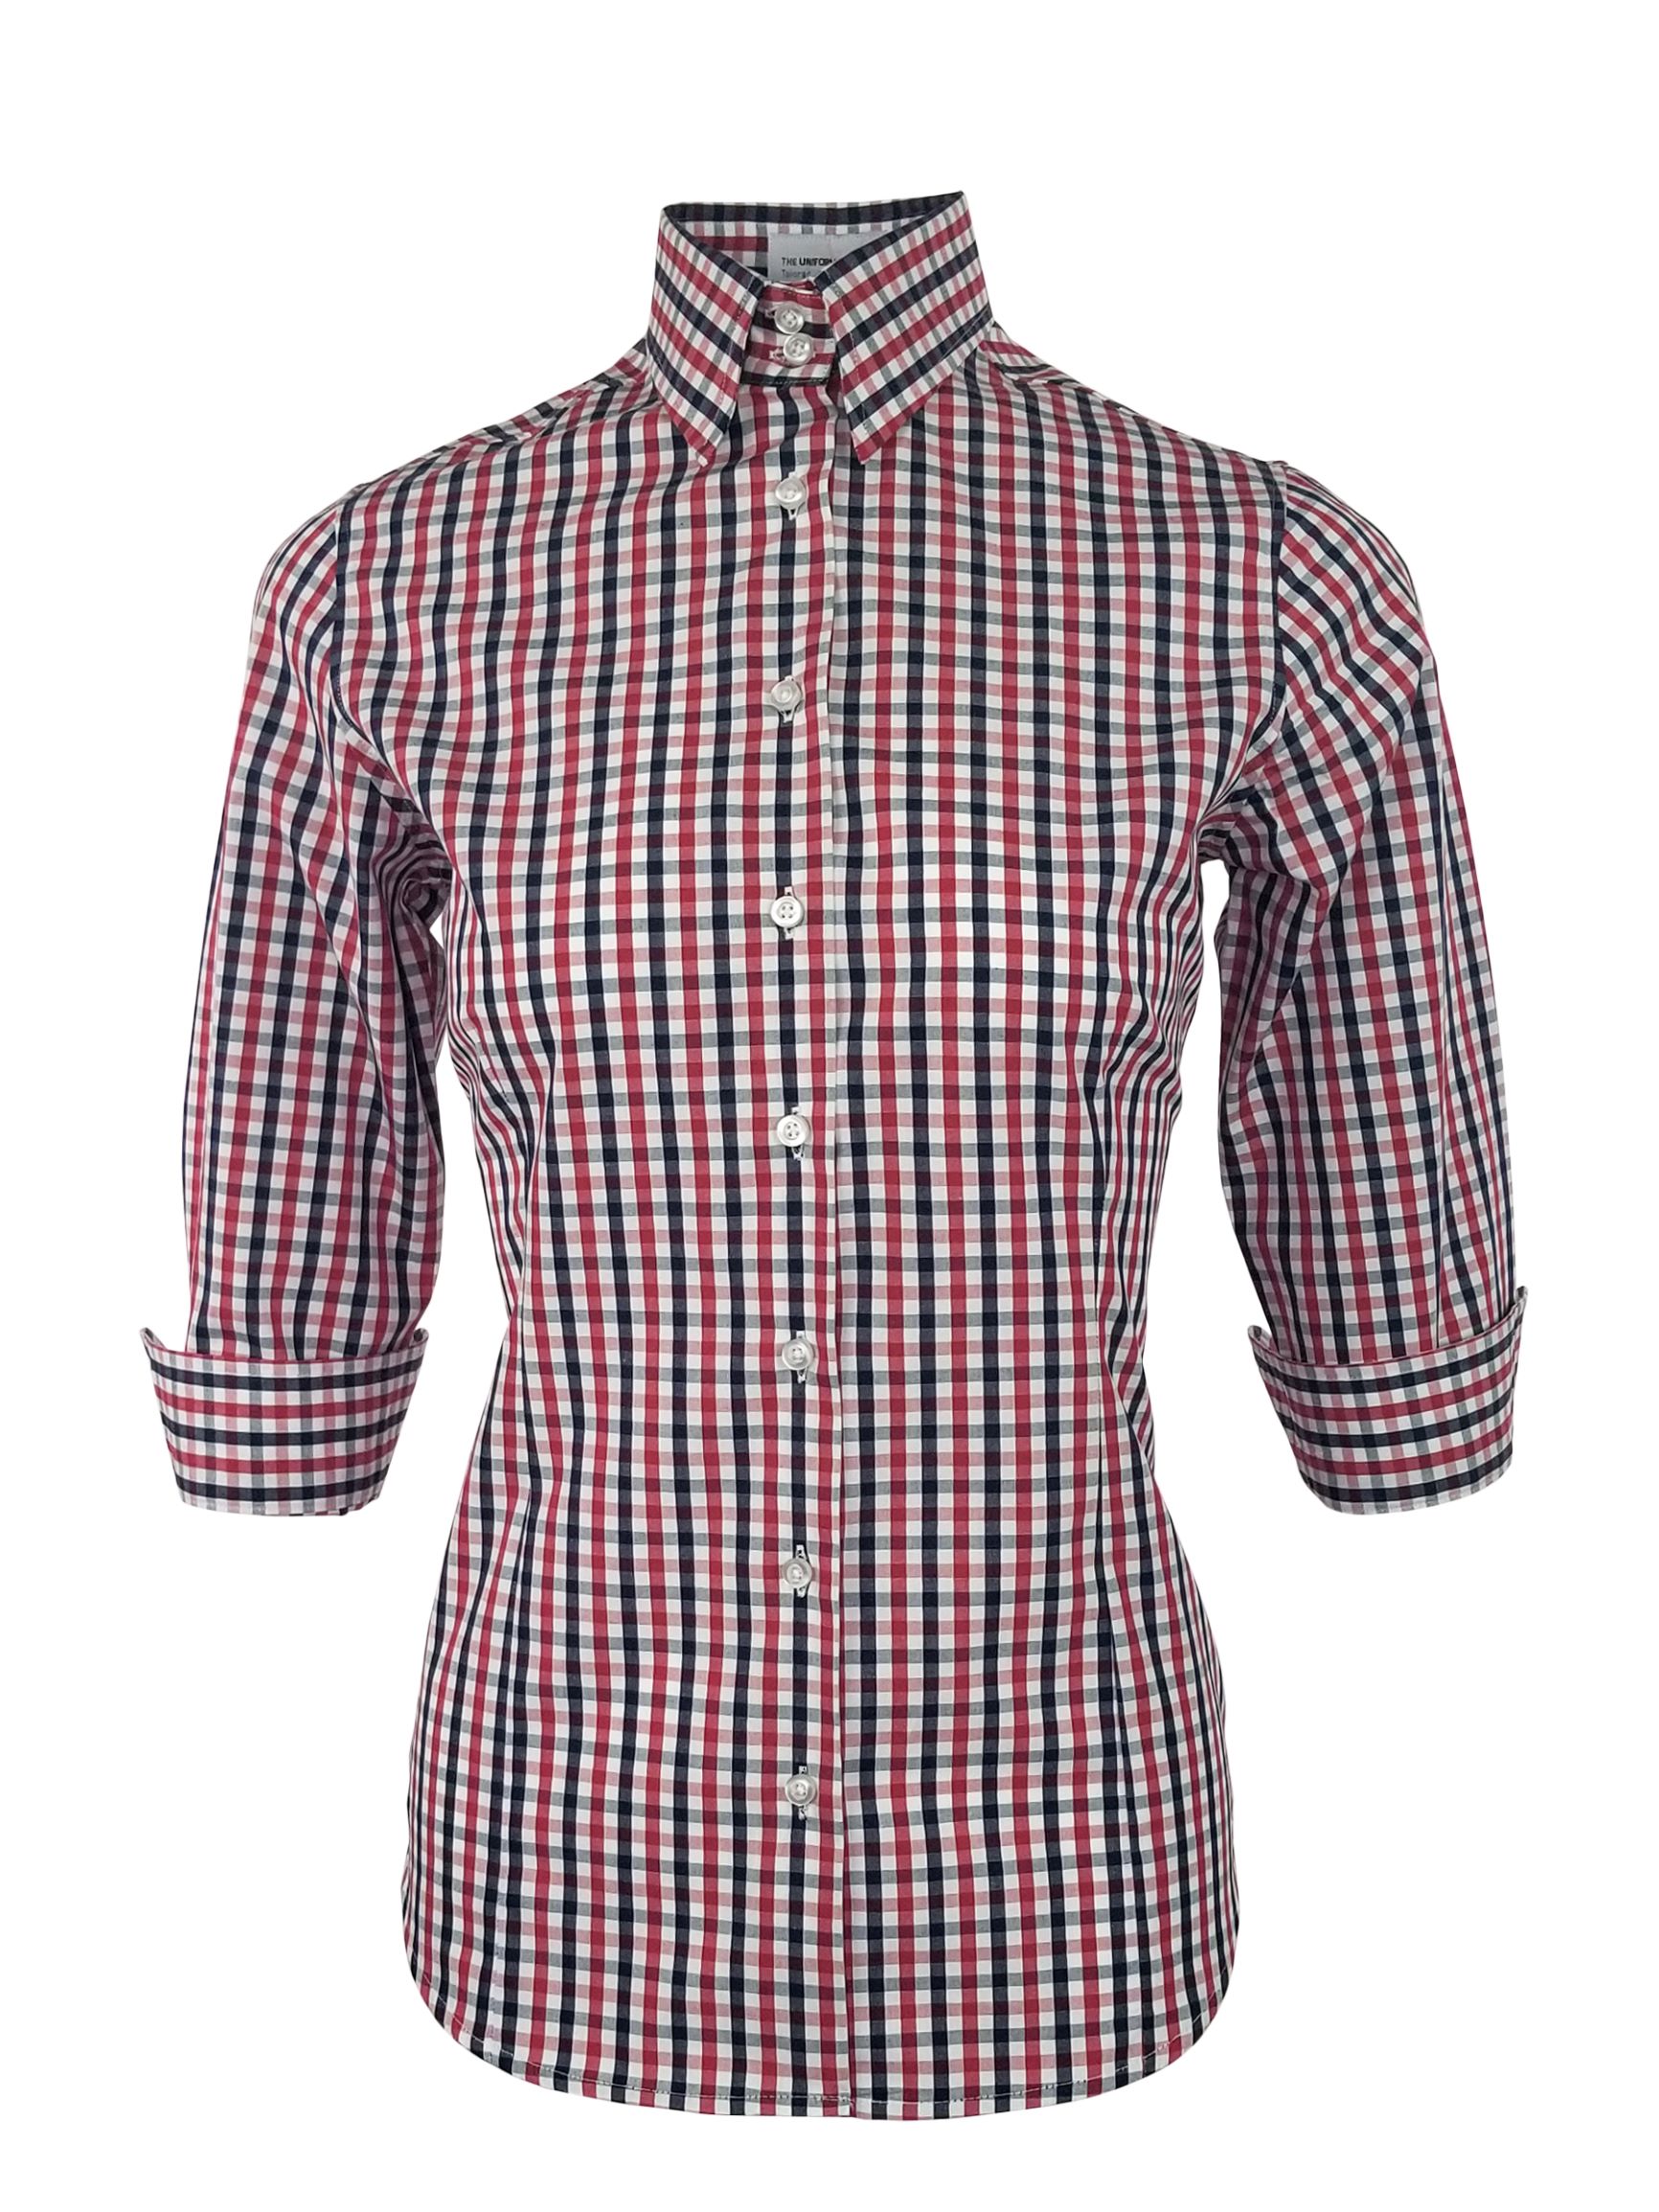 Women's Be Bold Shirt - Red Navy Check Three Quarter Sleeve - Uniform Edit